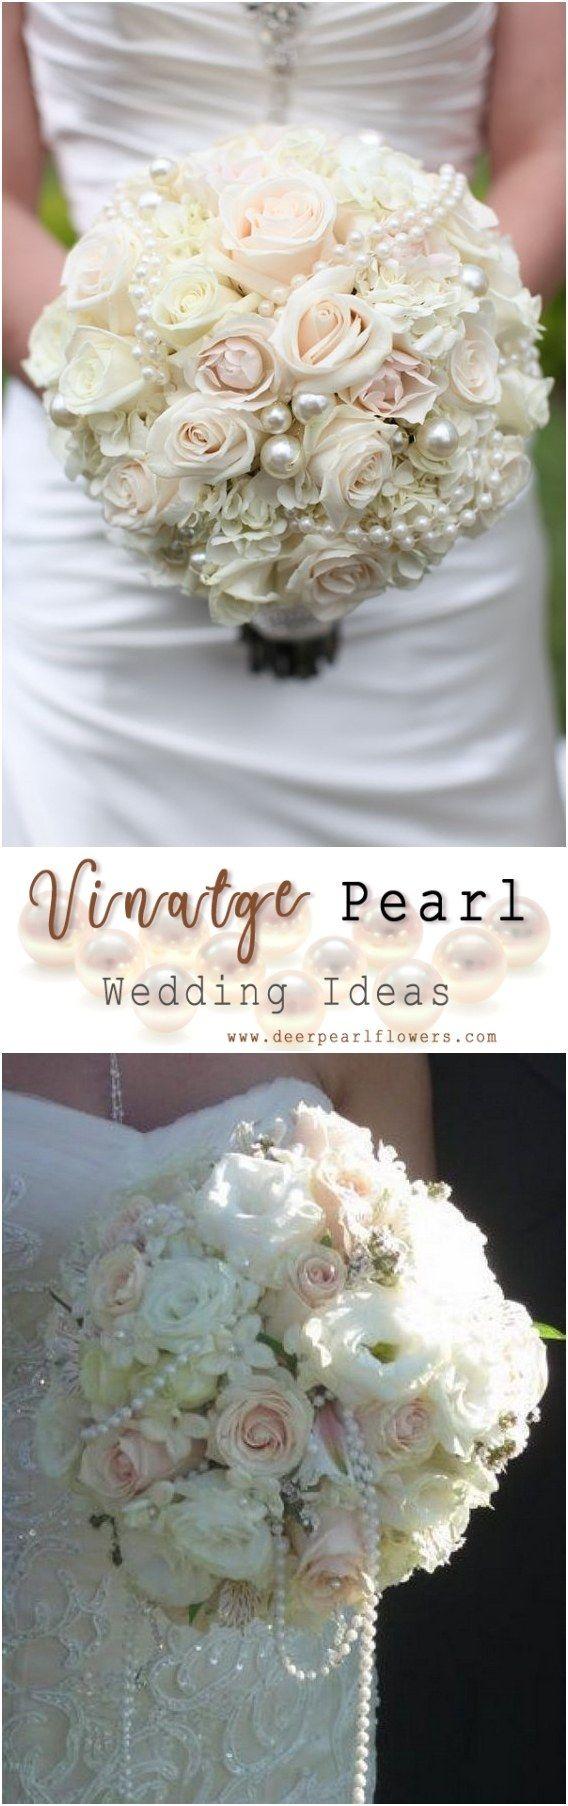 Hochzeit - 35 Chic Vintage Pearl Wedding Ideas You’ll Love